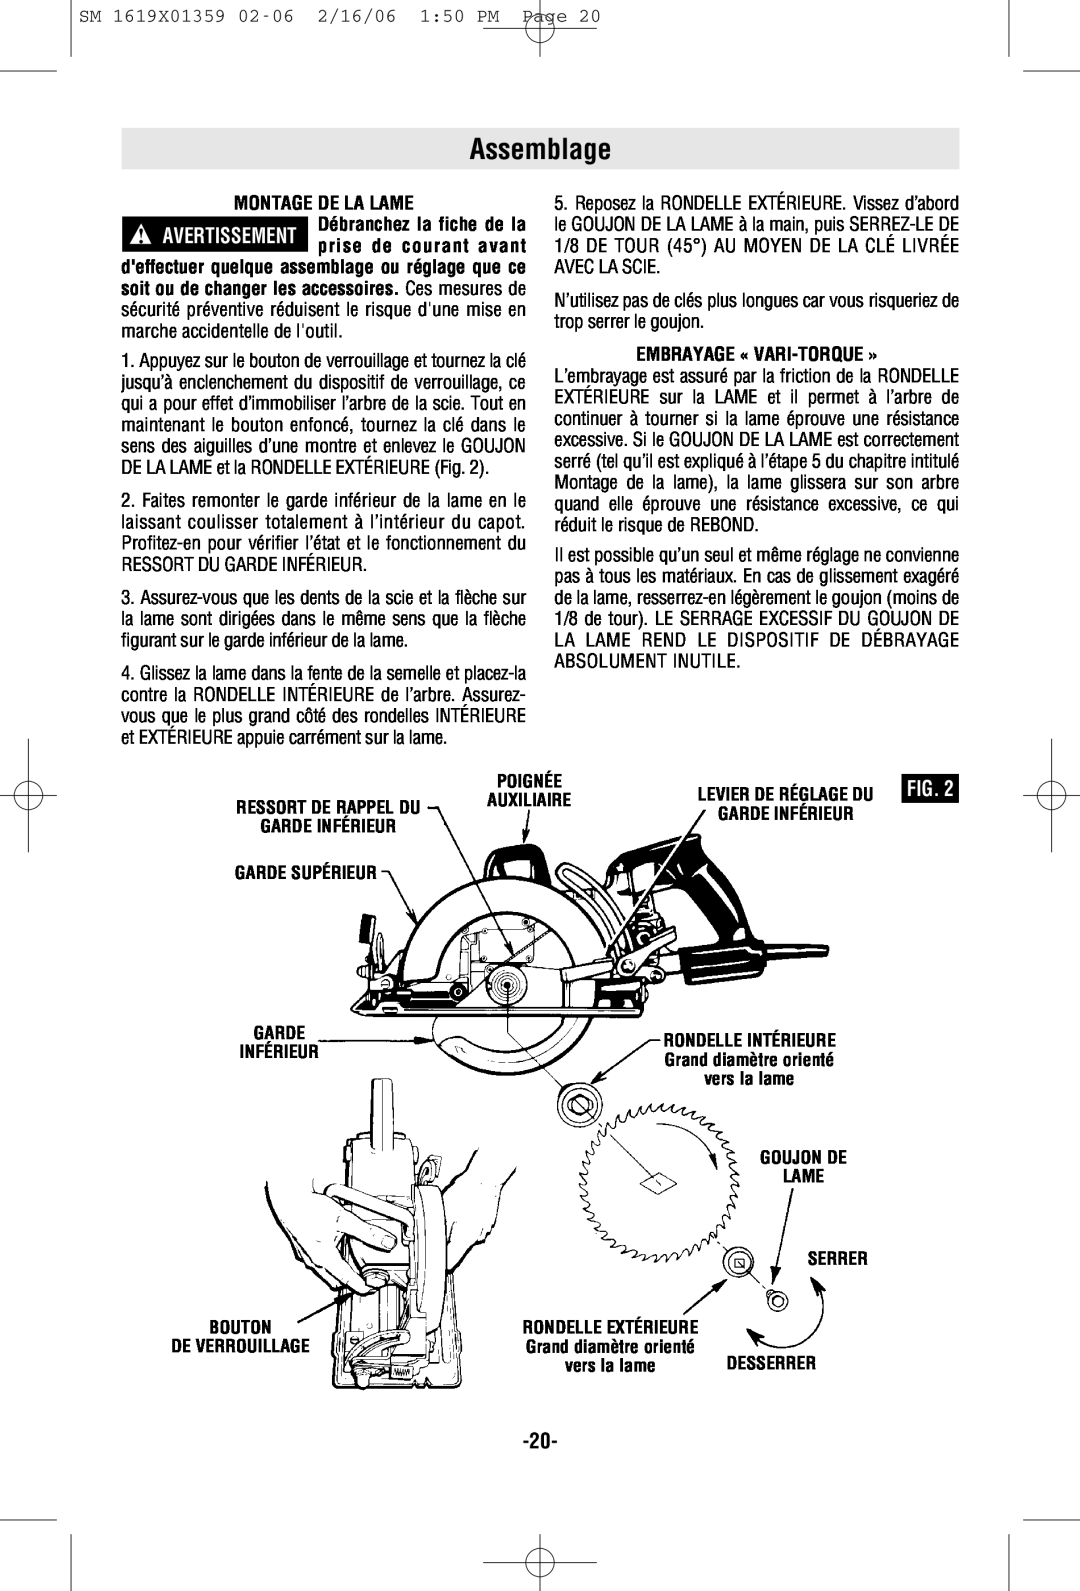 Skil HD5860 manual Assemblage, Montage De La Lame, Embrayage « Vari-Torque», Fig 